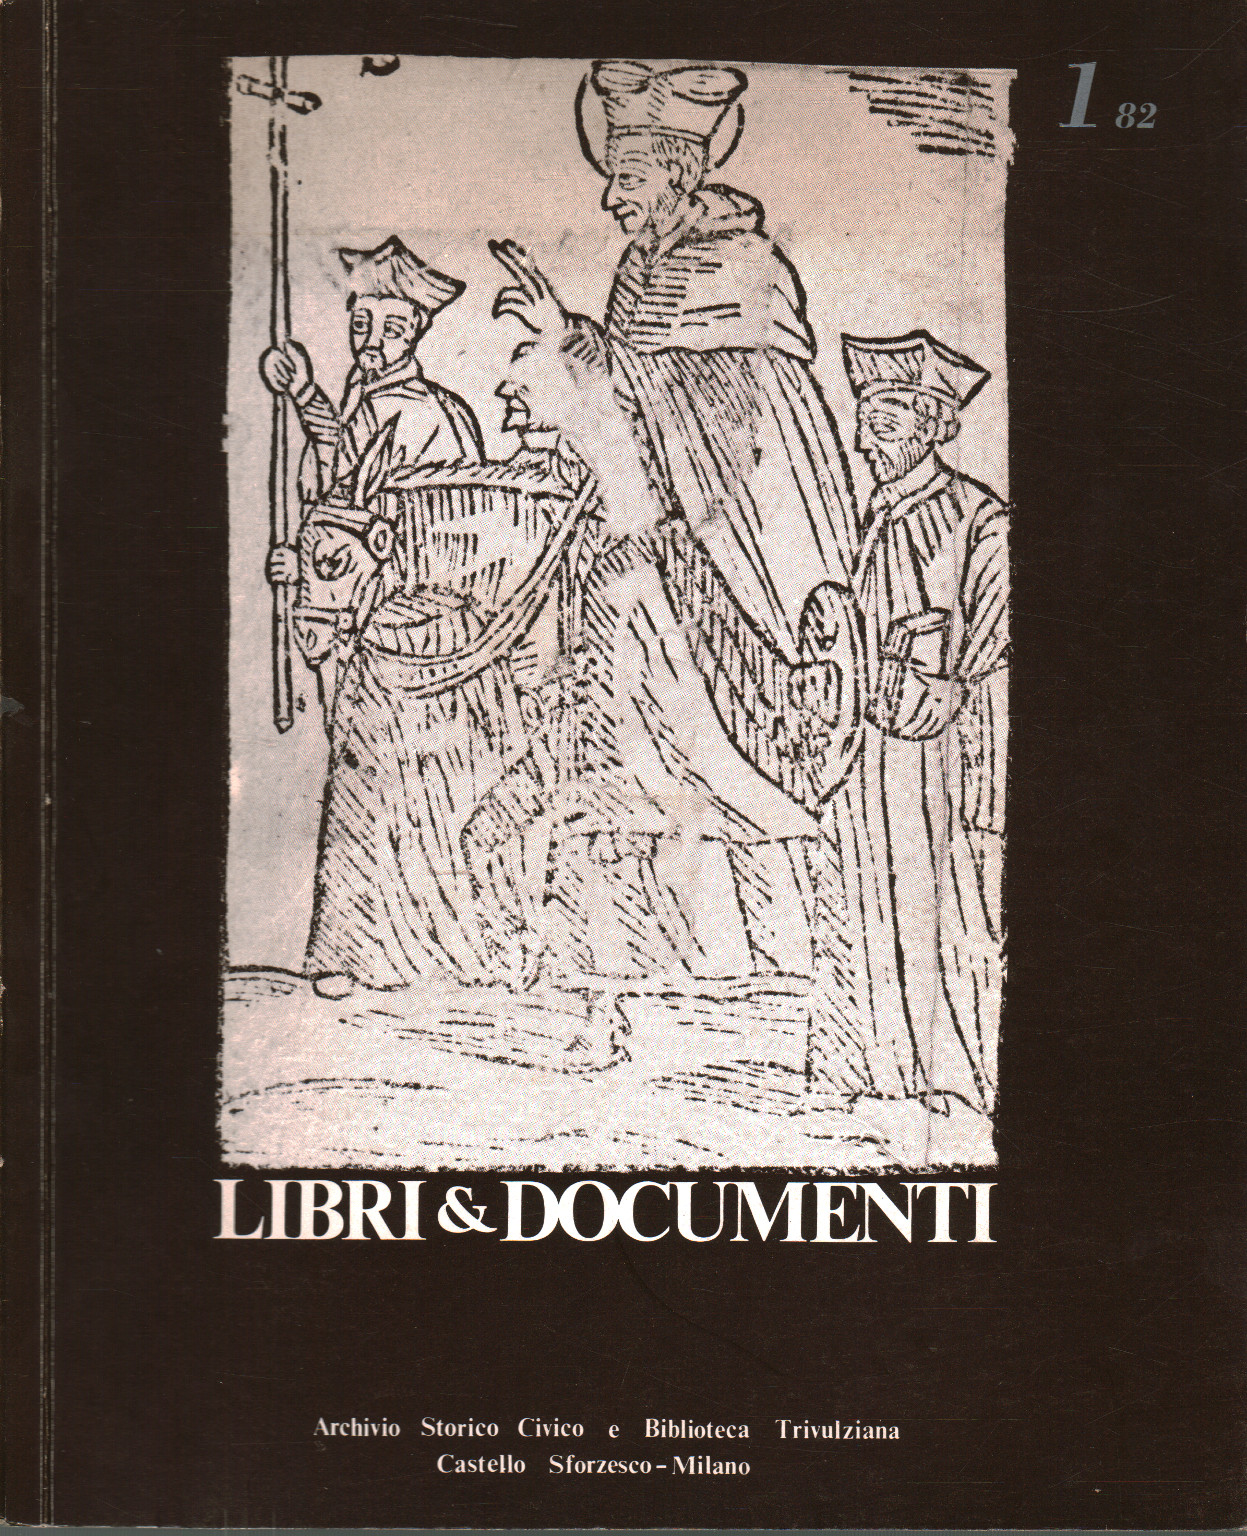 Livres & Documents, An VIII/ Nombre 1/1982, AA.VV